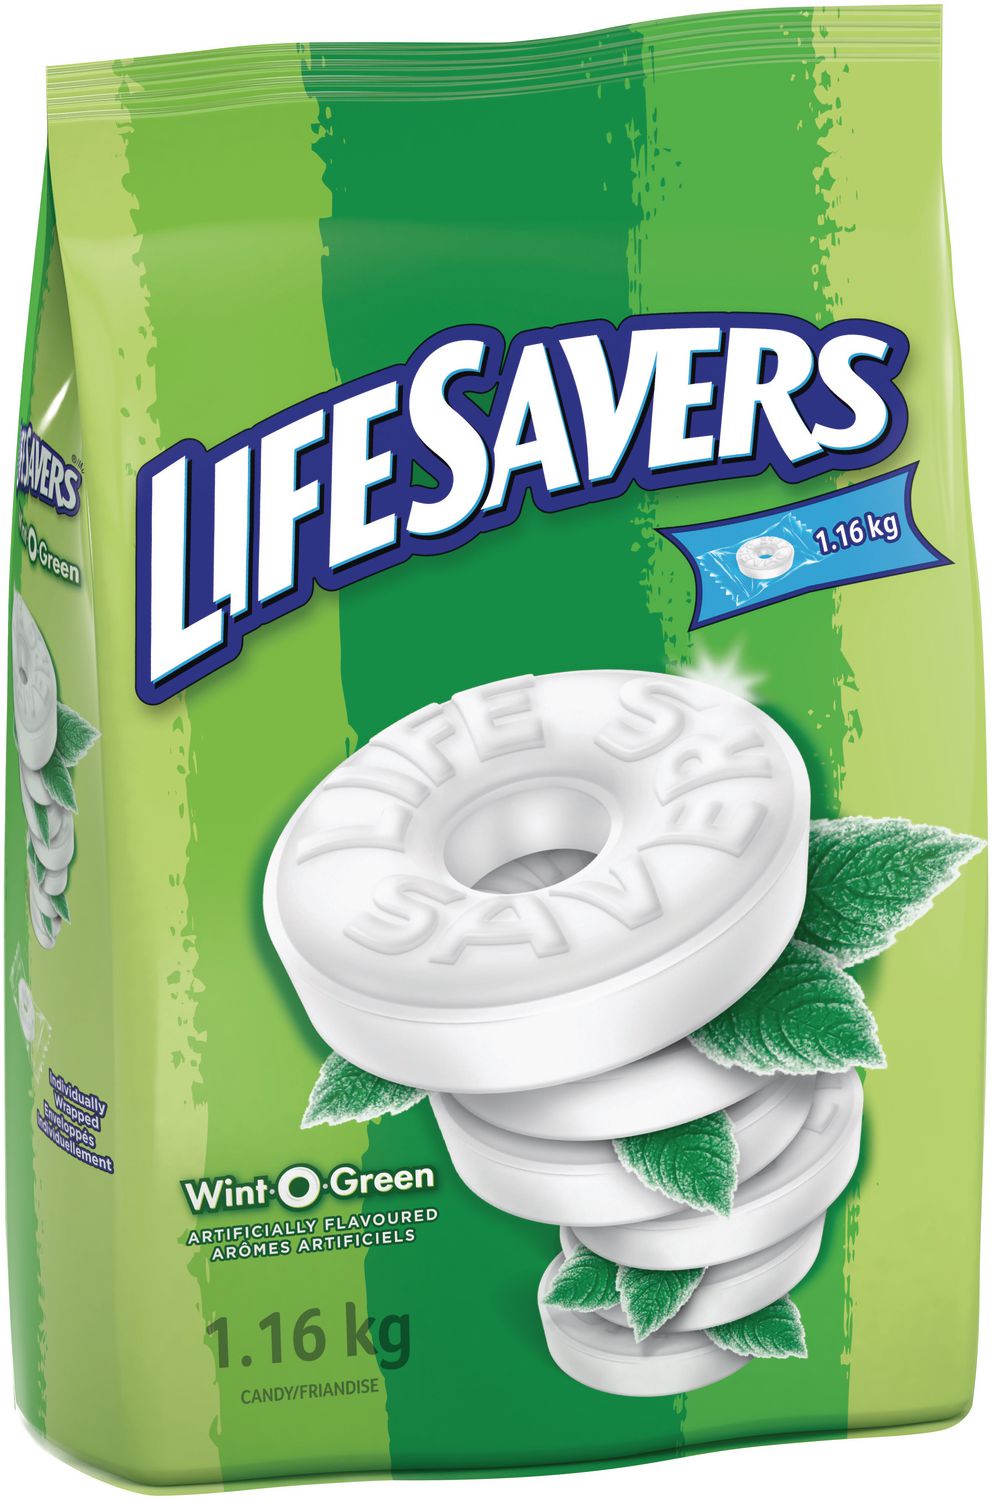 lifesaver mints